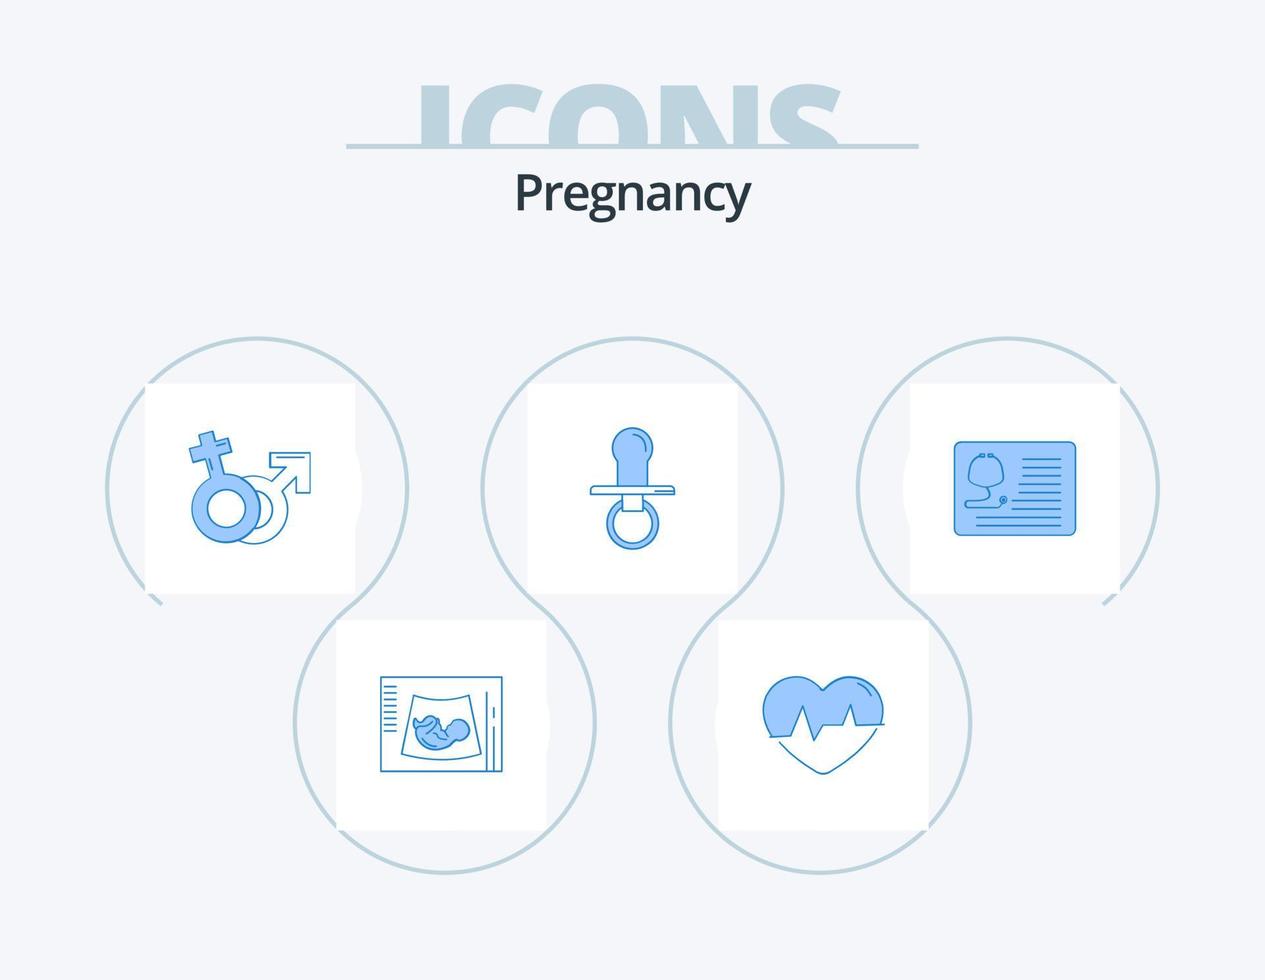 paquete de iconos azul de embarazo 5 diseño de iconos. tonto. pezón. legumbres. femenino. Marte vector